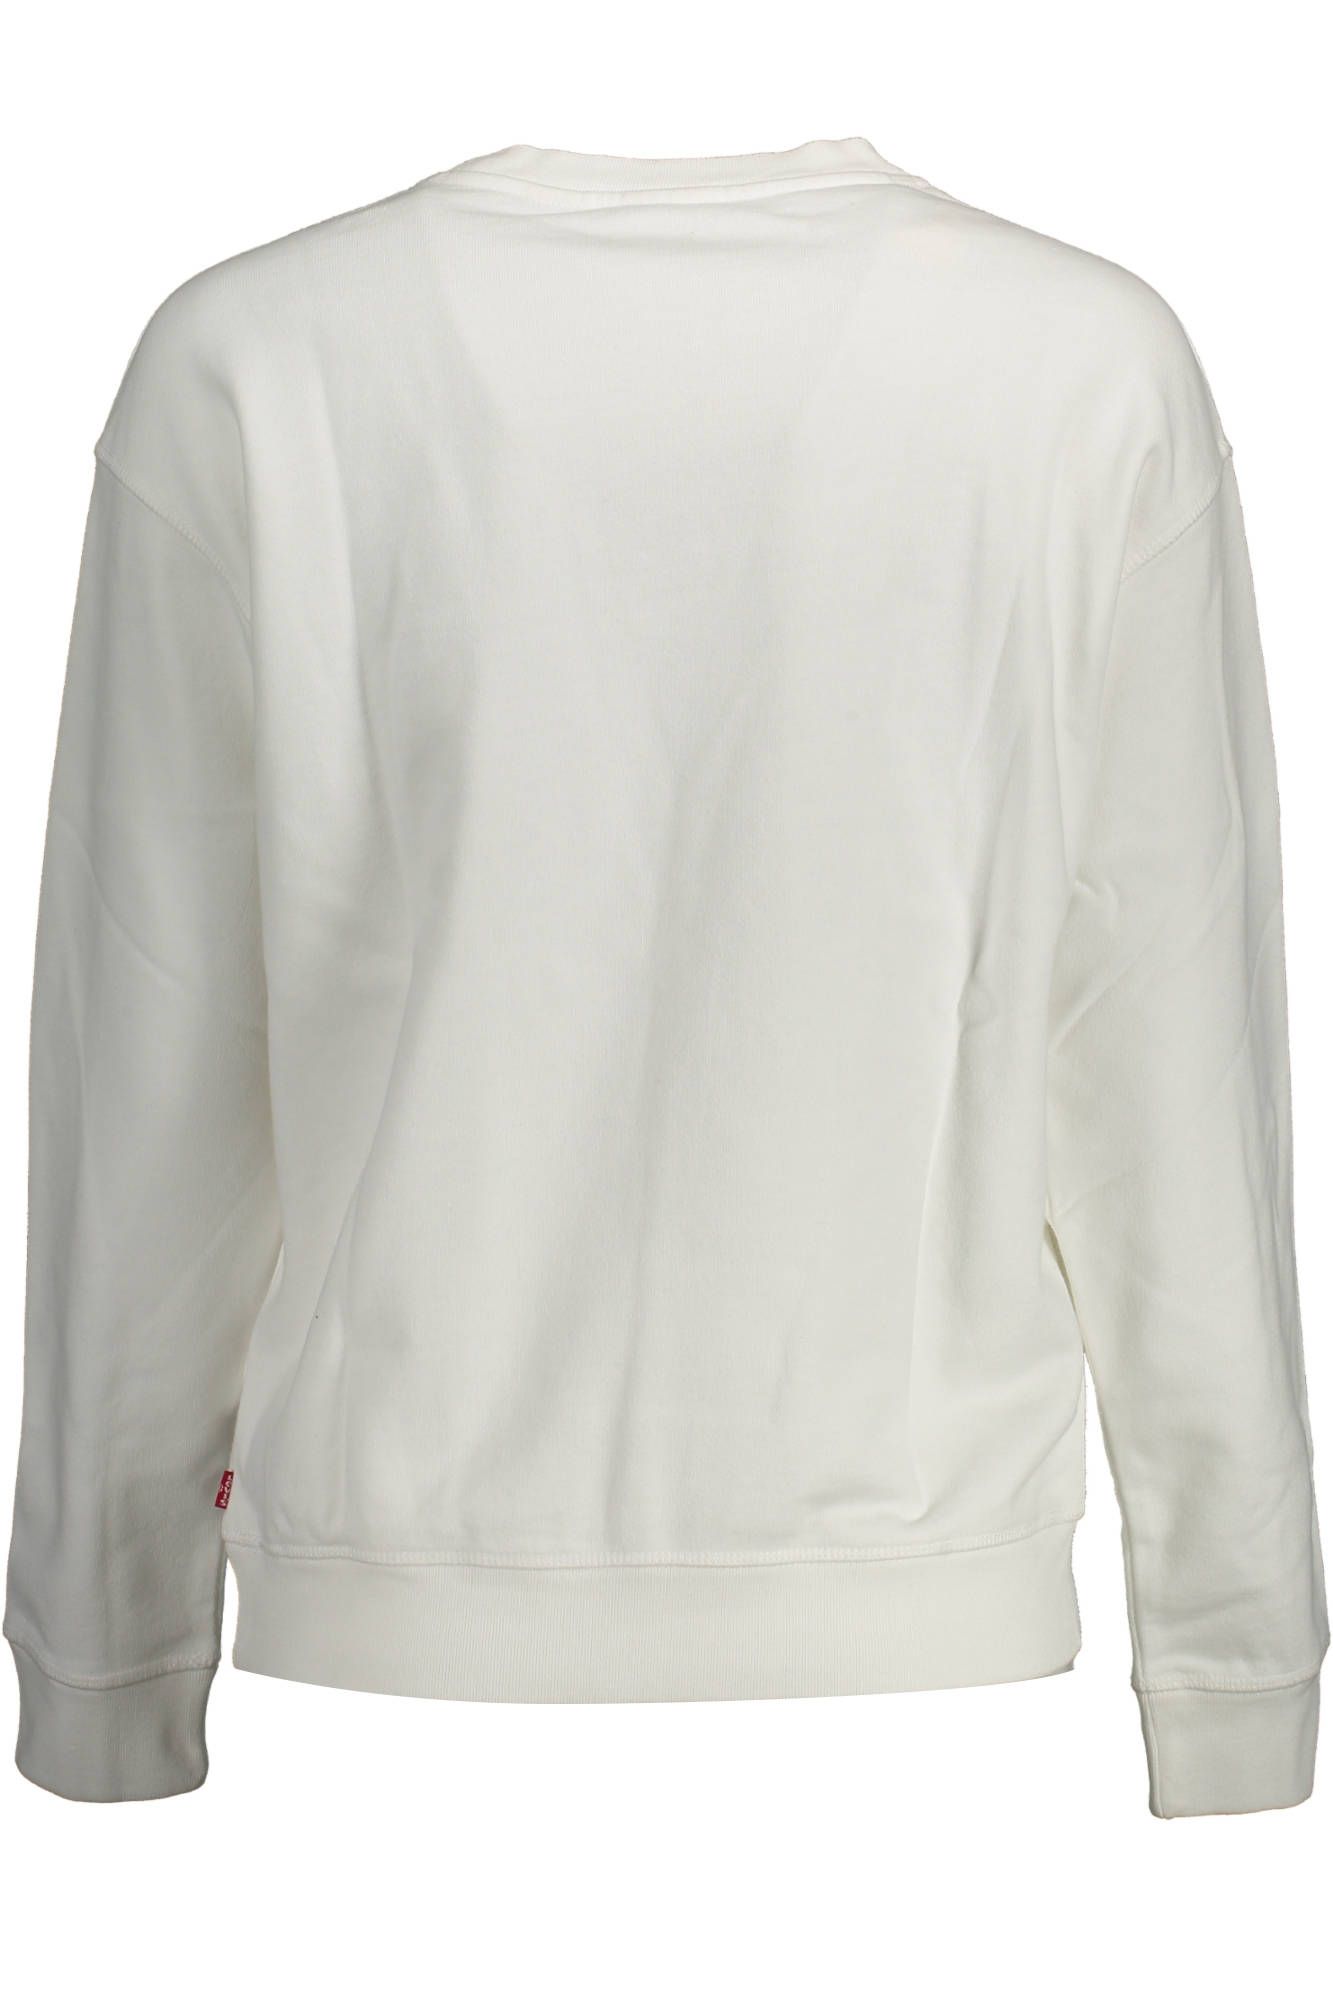 Chic White Cotton Logo Sweatshirt - Divitiae Glamour